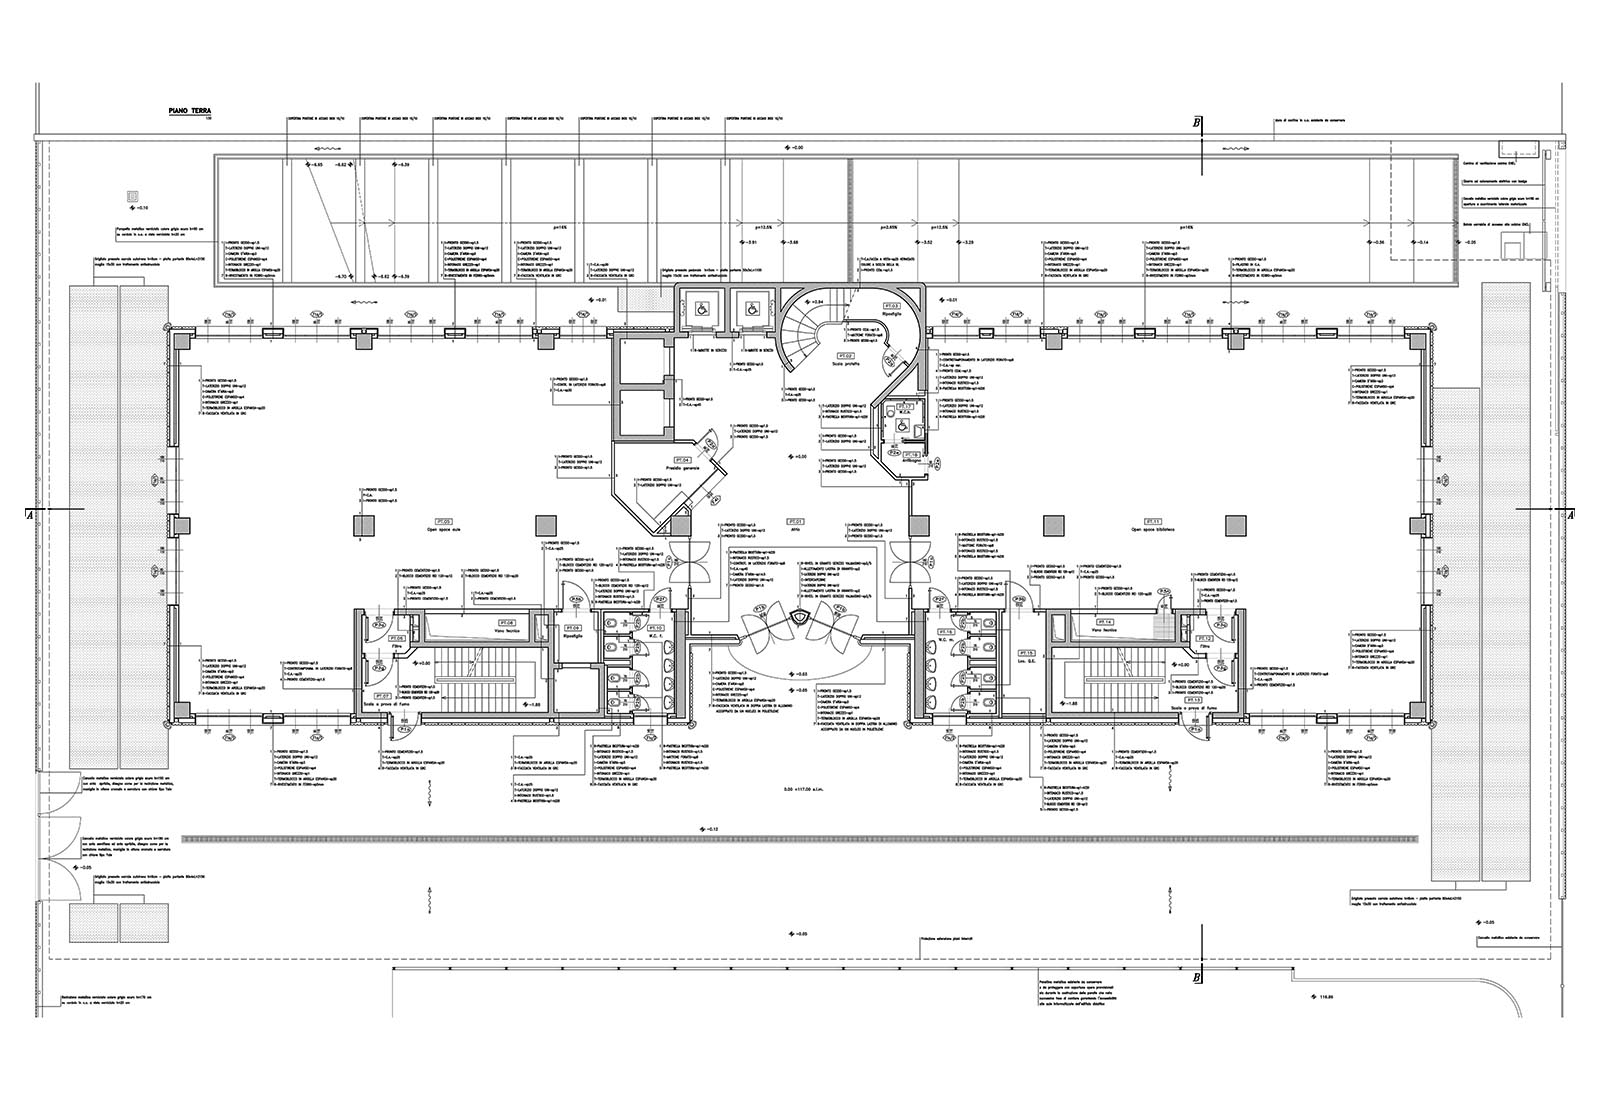 Building 22 Politecnico di Milano - Ground floor plan